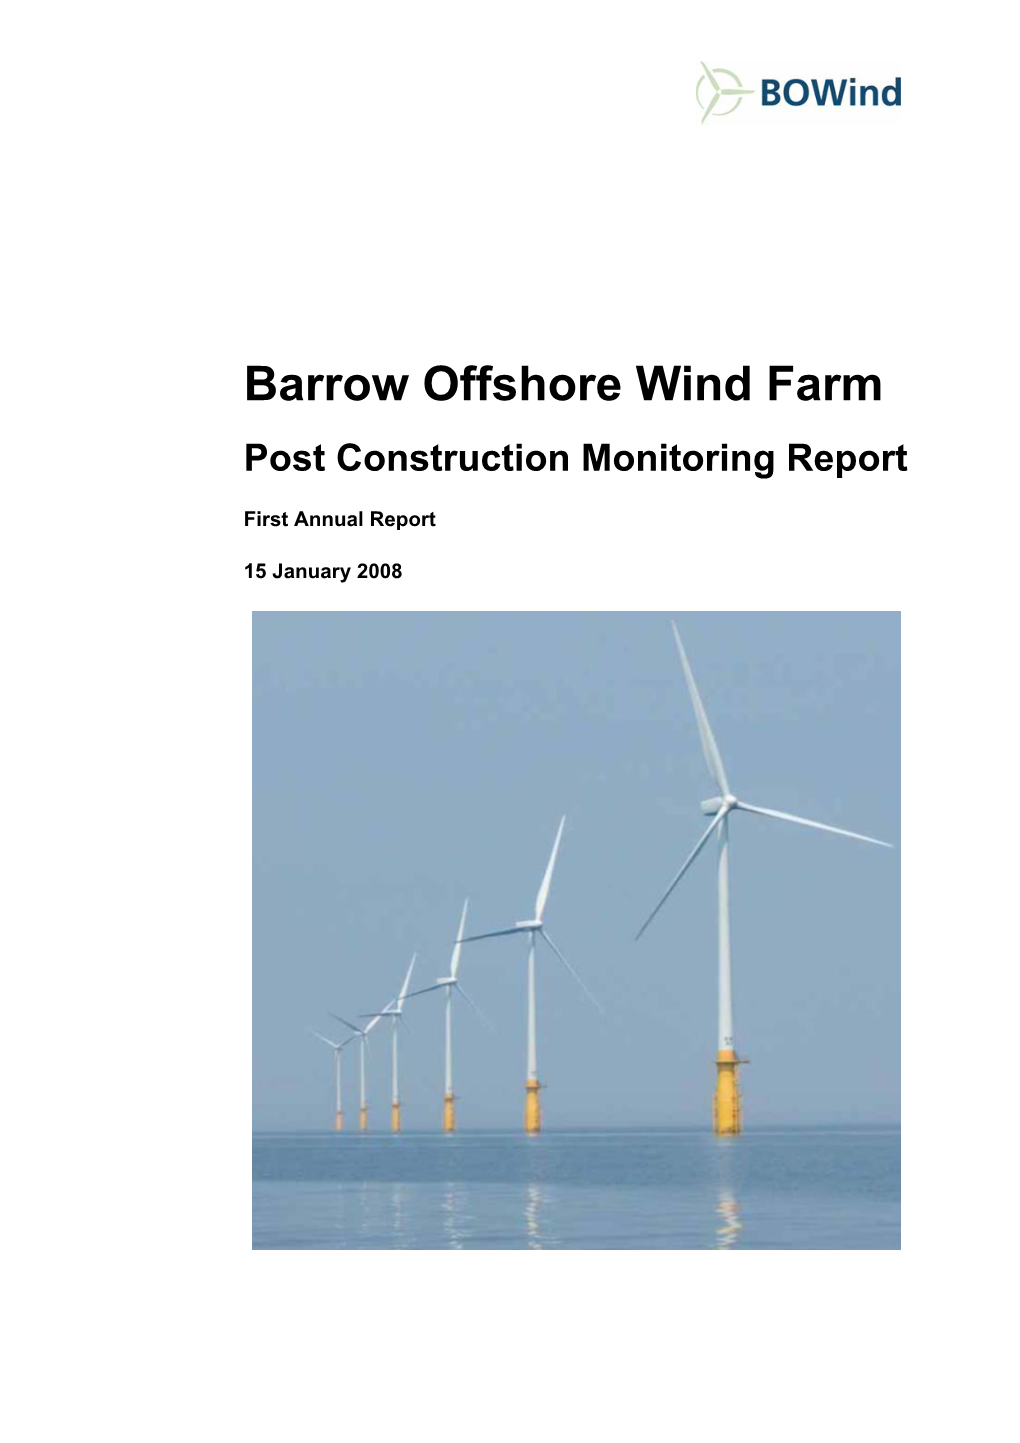 Barrow Offshore Wind Farm Post Construction Monitoring Report